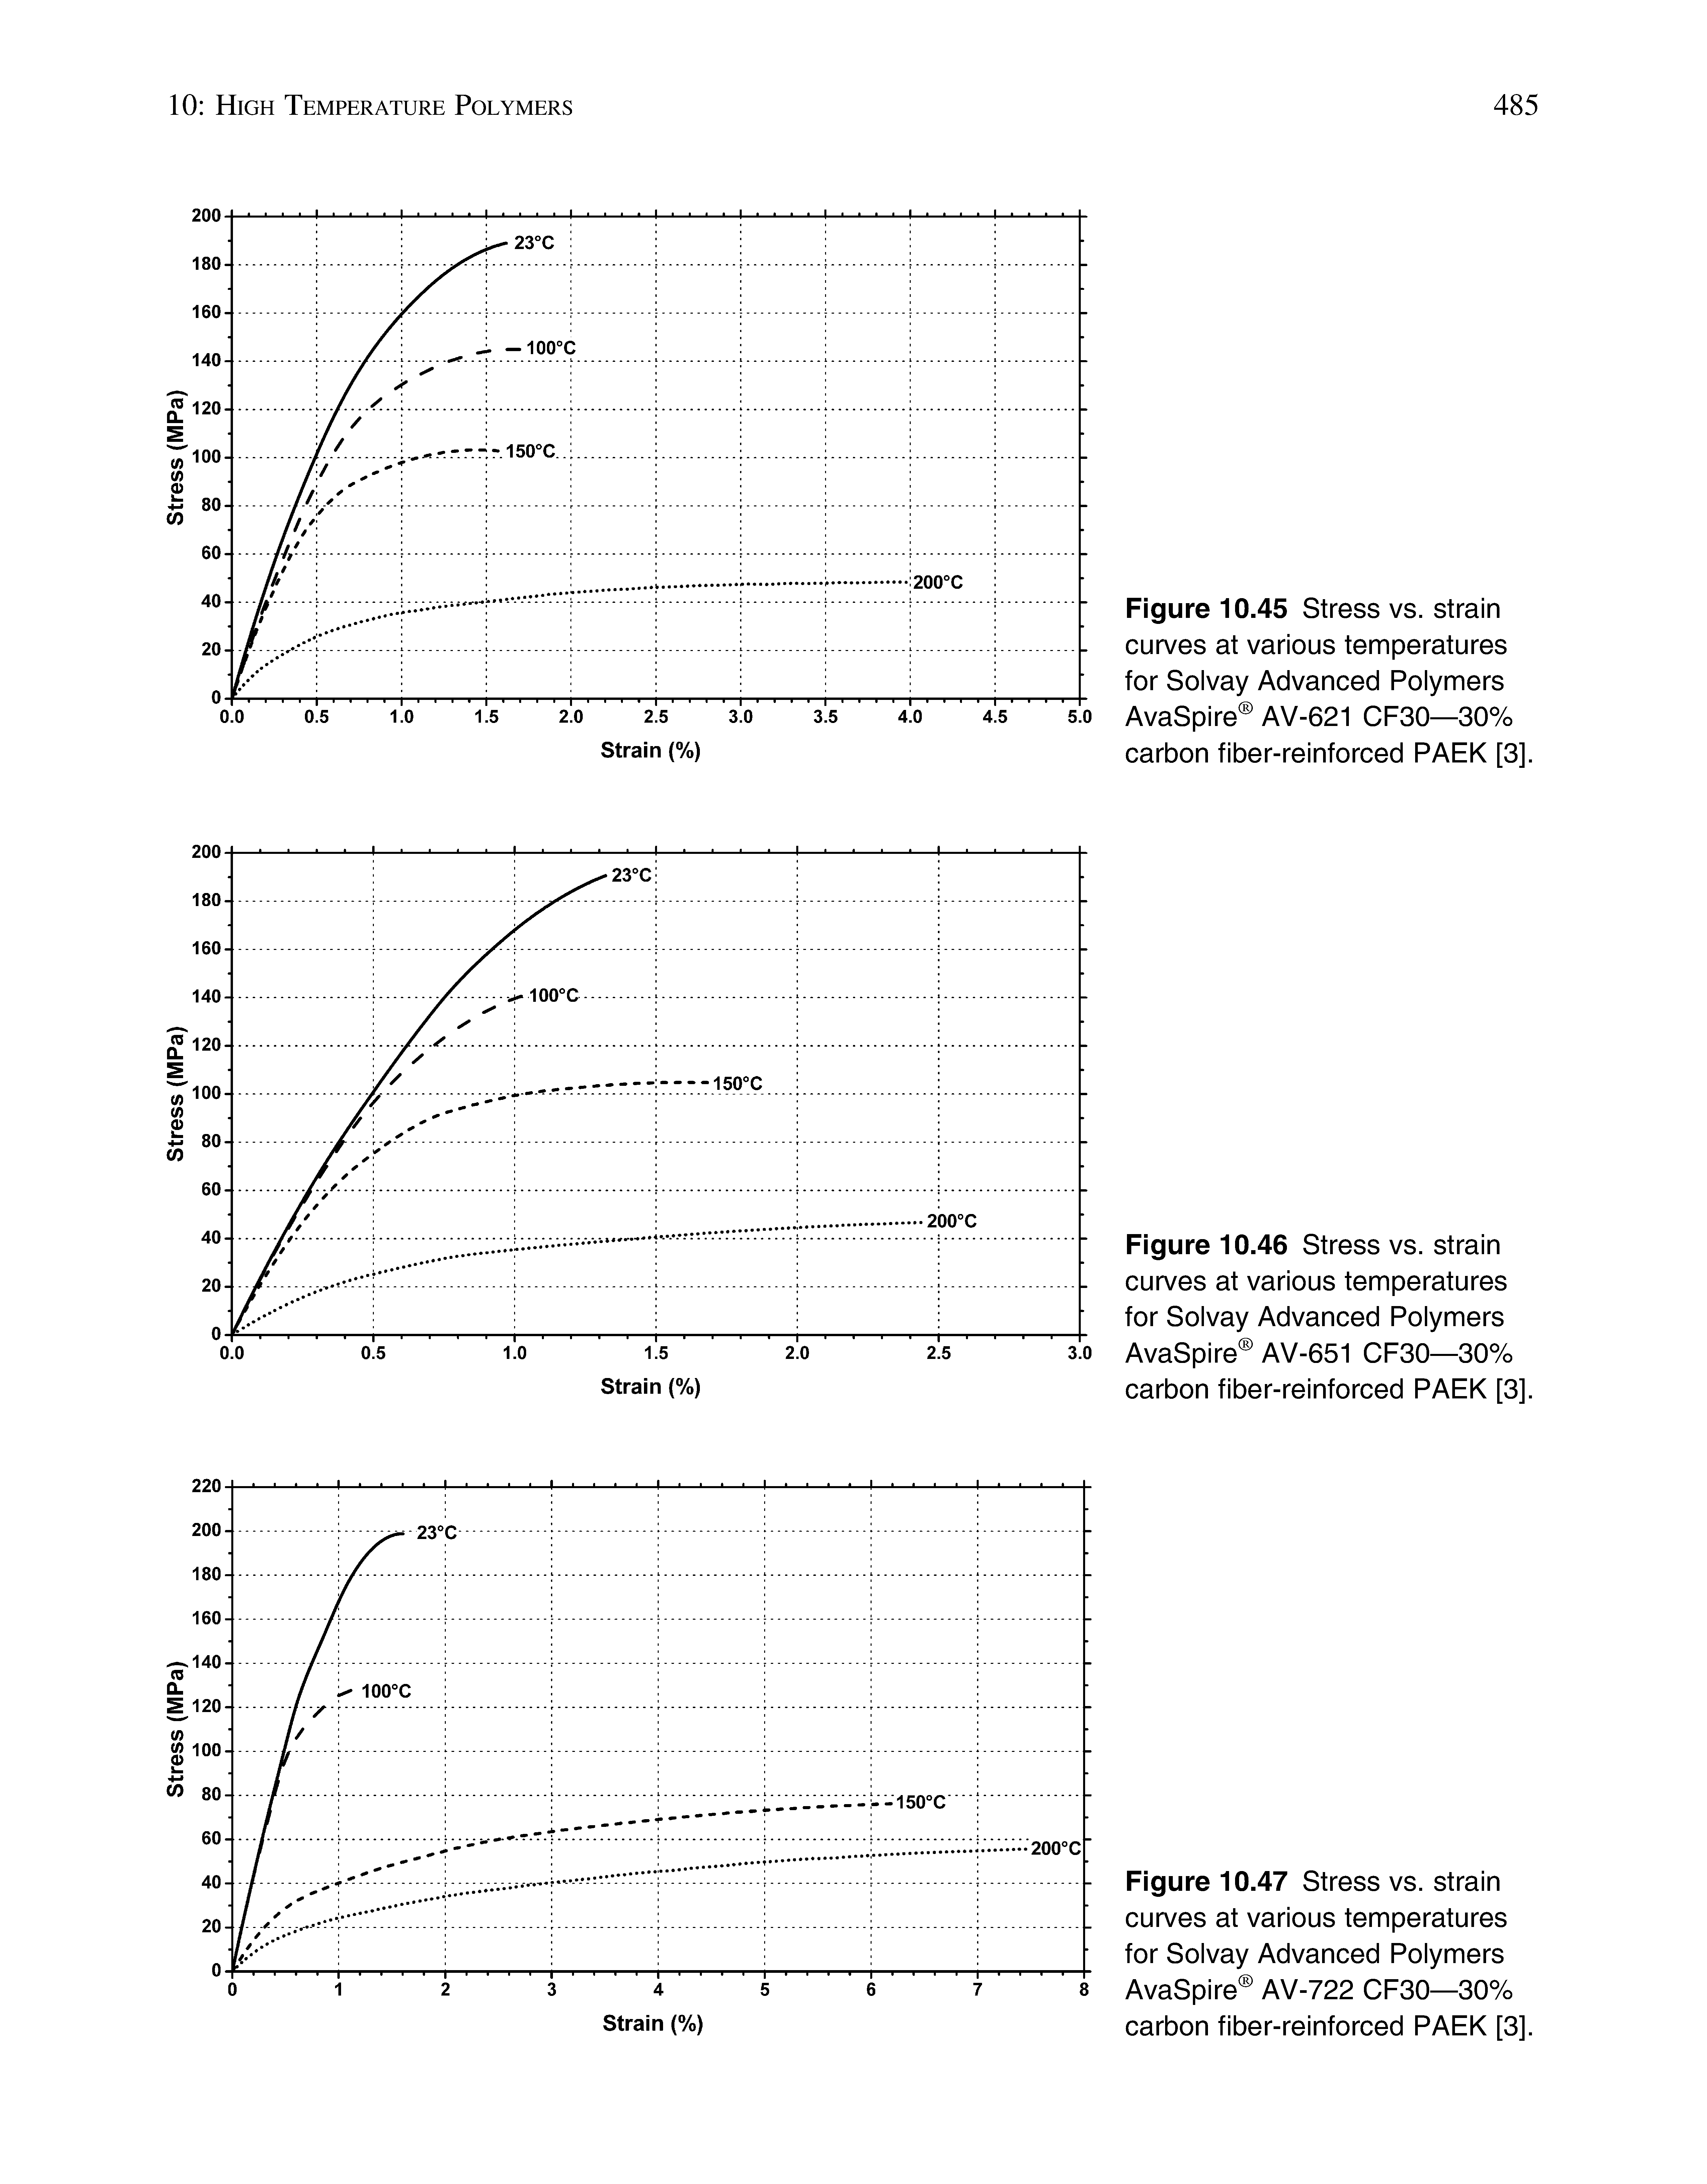 Figure 10.45 Stress vs. strain curves at various temperatures for Solvay Advanced Polymers AvaSpire AV-621 CF30—30% carbon fiber-reinforced PAEK [3].